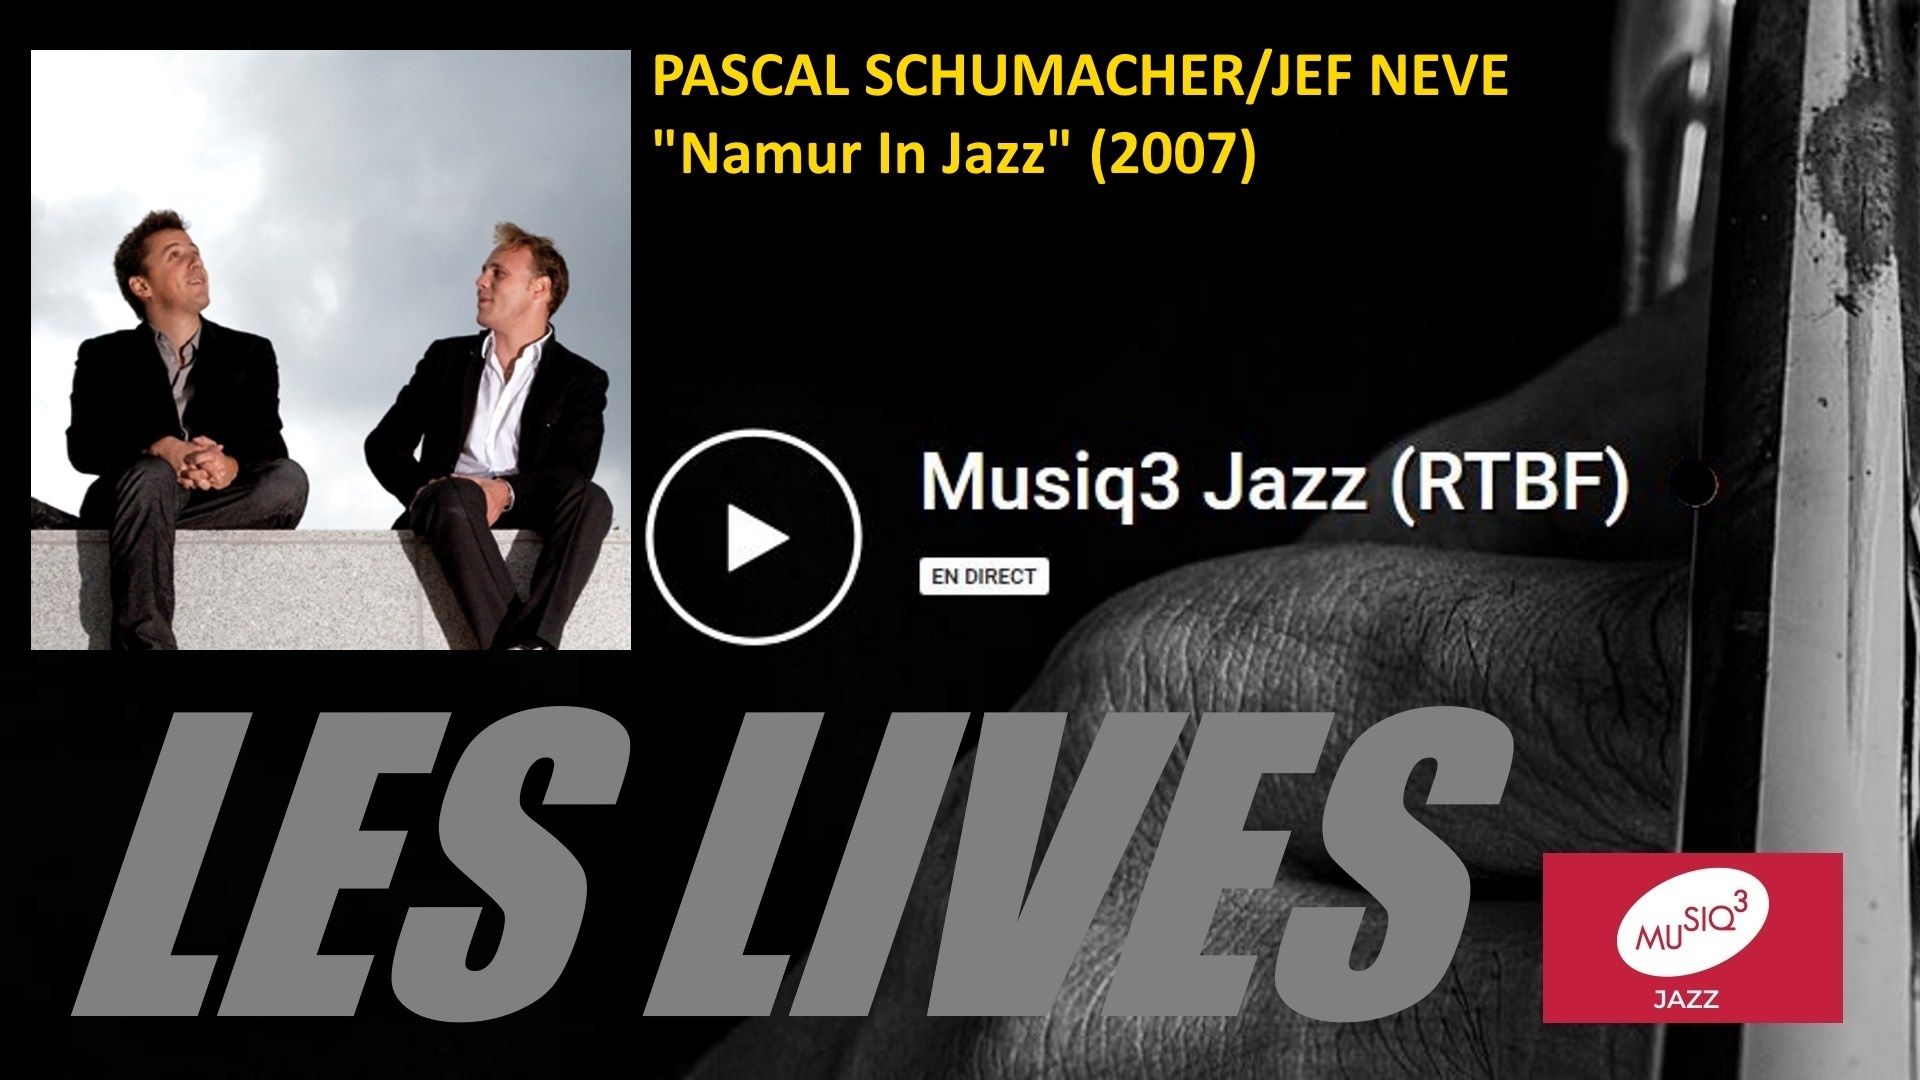 Les lives : Jef Neve/Pascal Schumacher (Namur In Jazz, 2007)